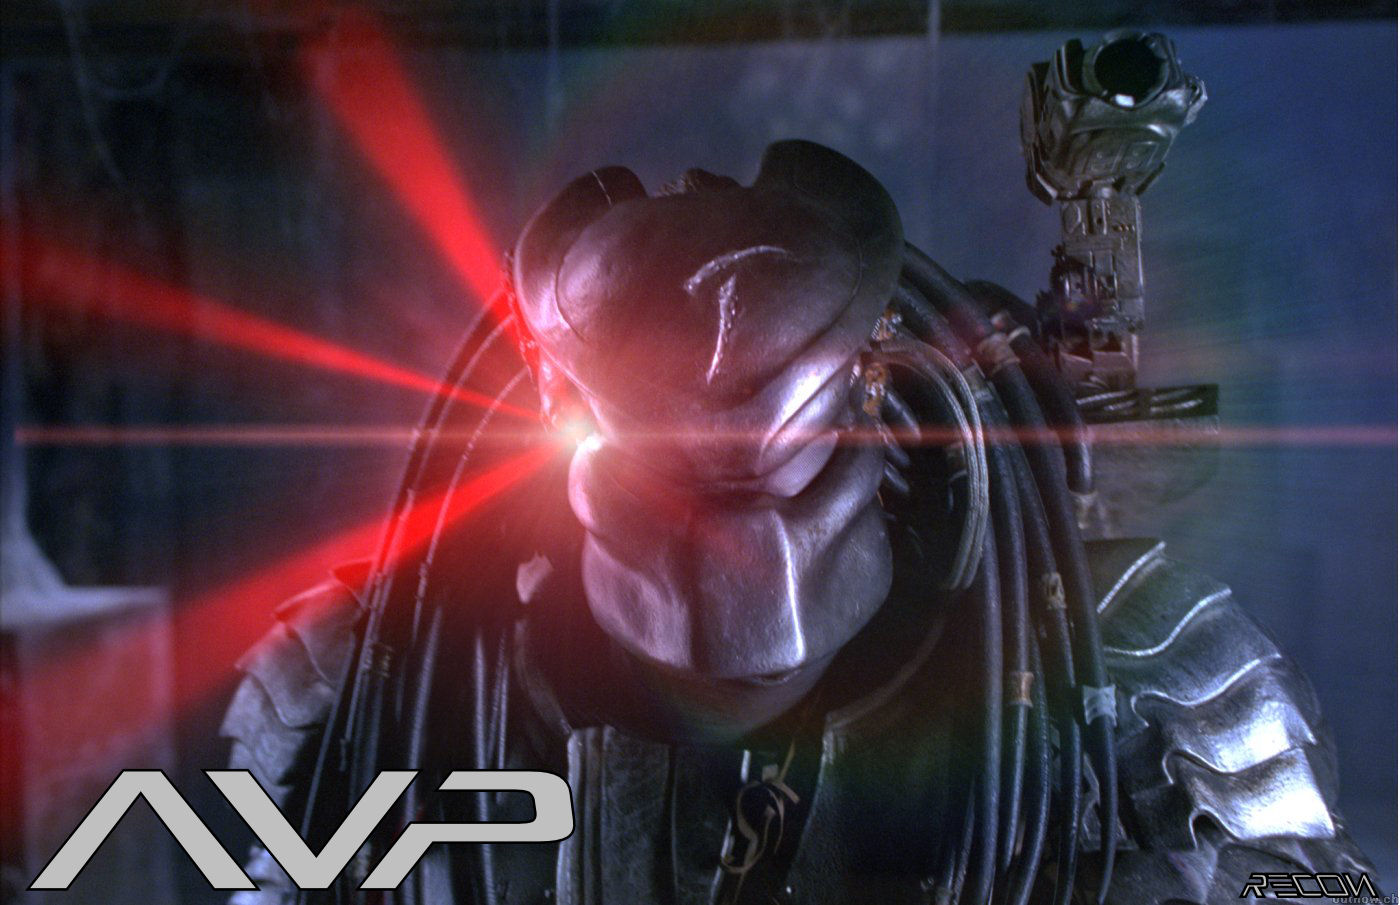 Download full size Alien Vs Predator wallpaper / Movies / 1400x905